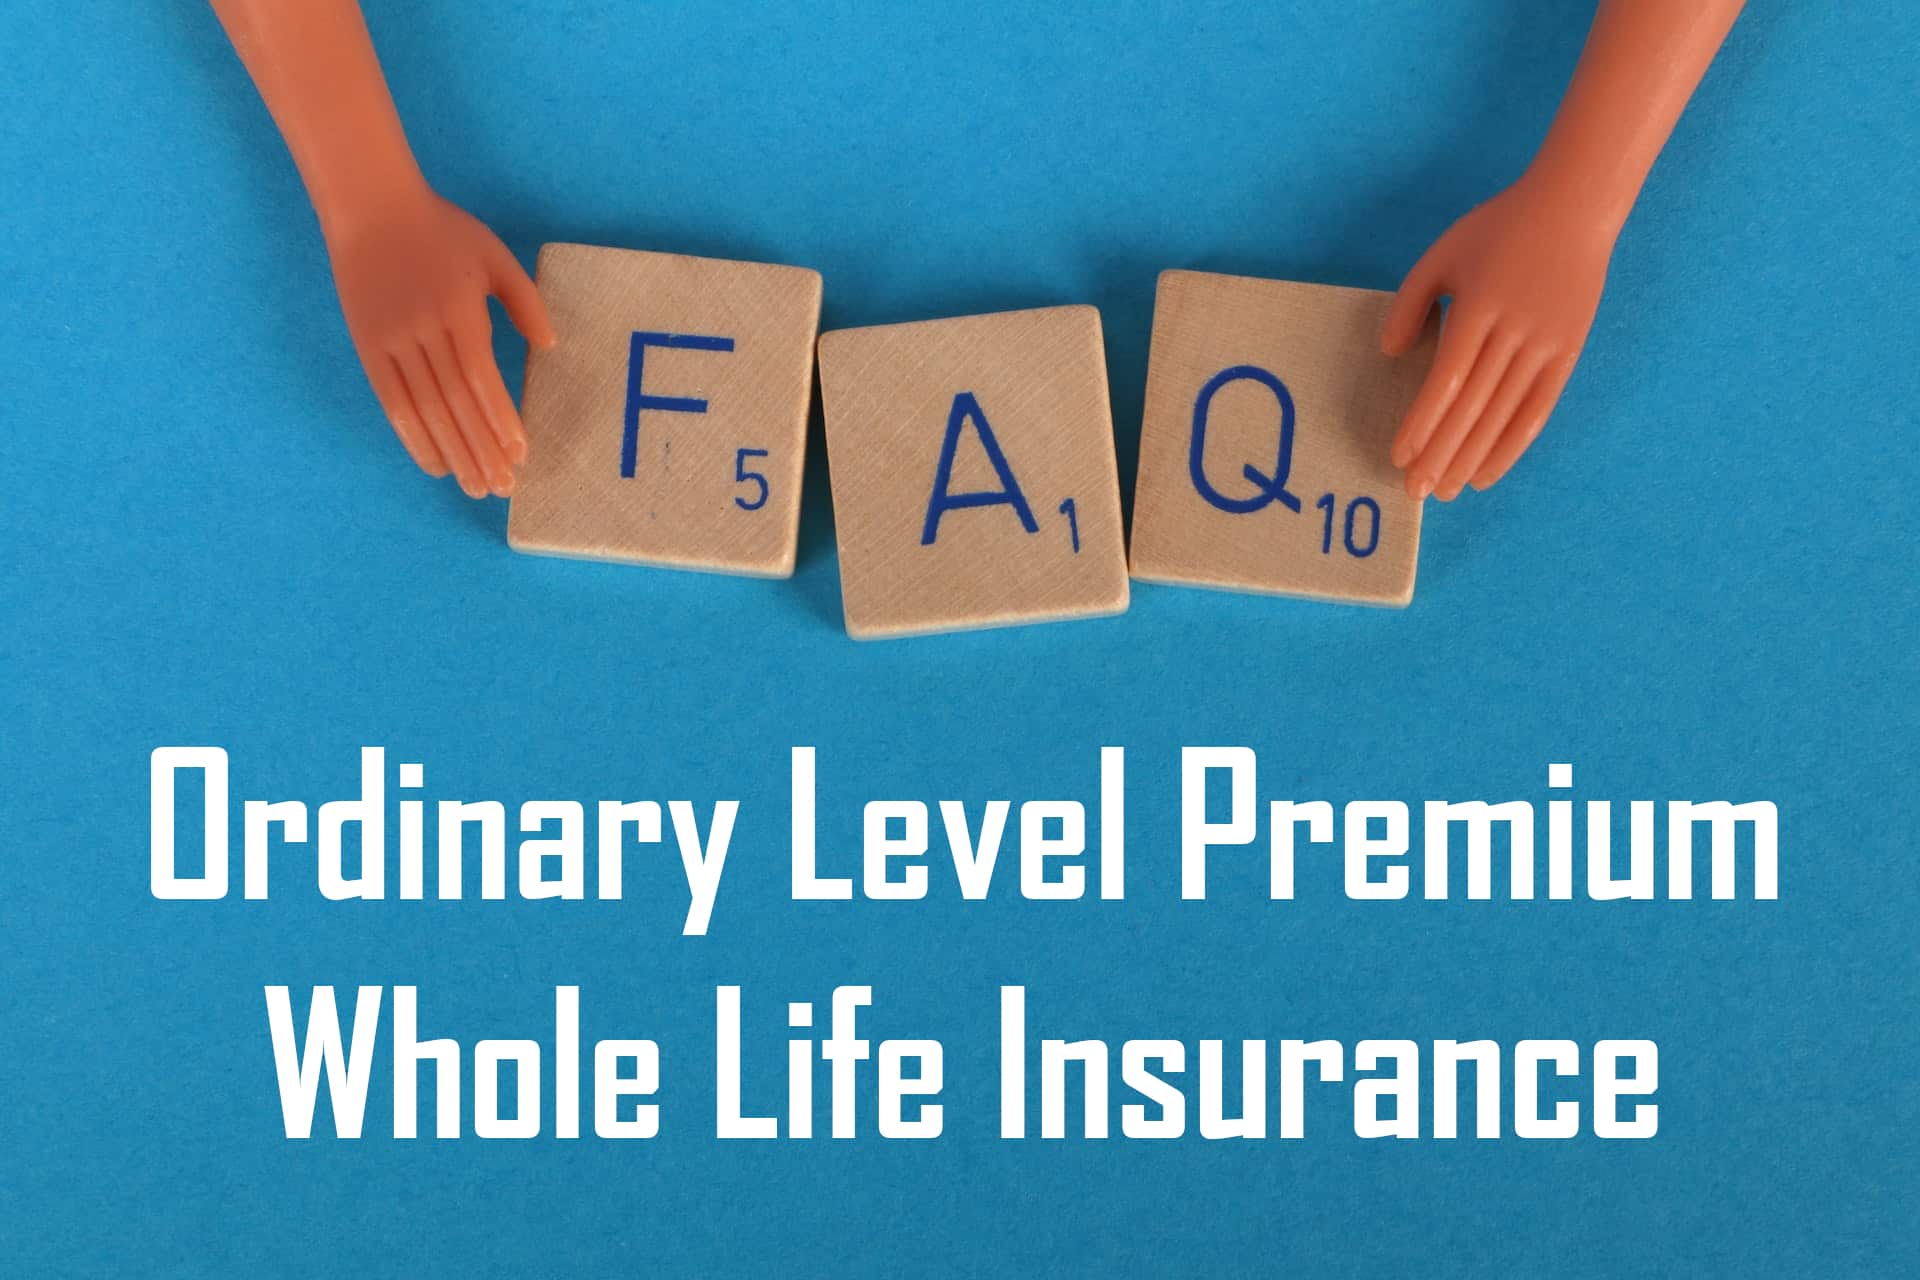 Ordinary Level Premium Whole Life Insurance FAQs